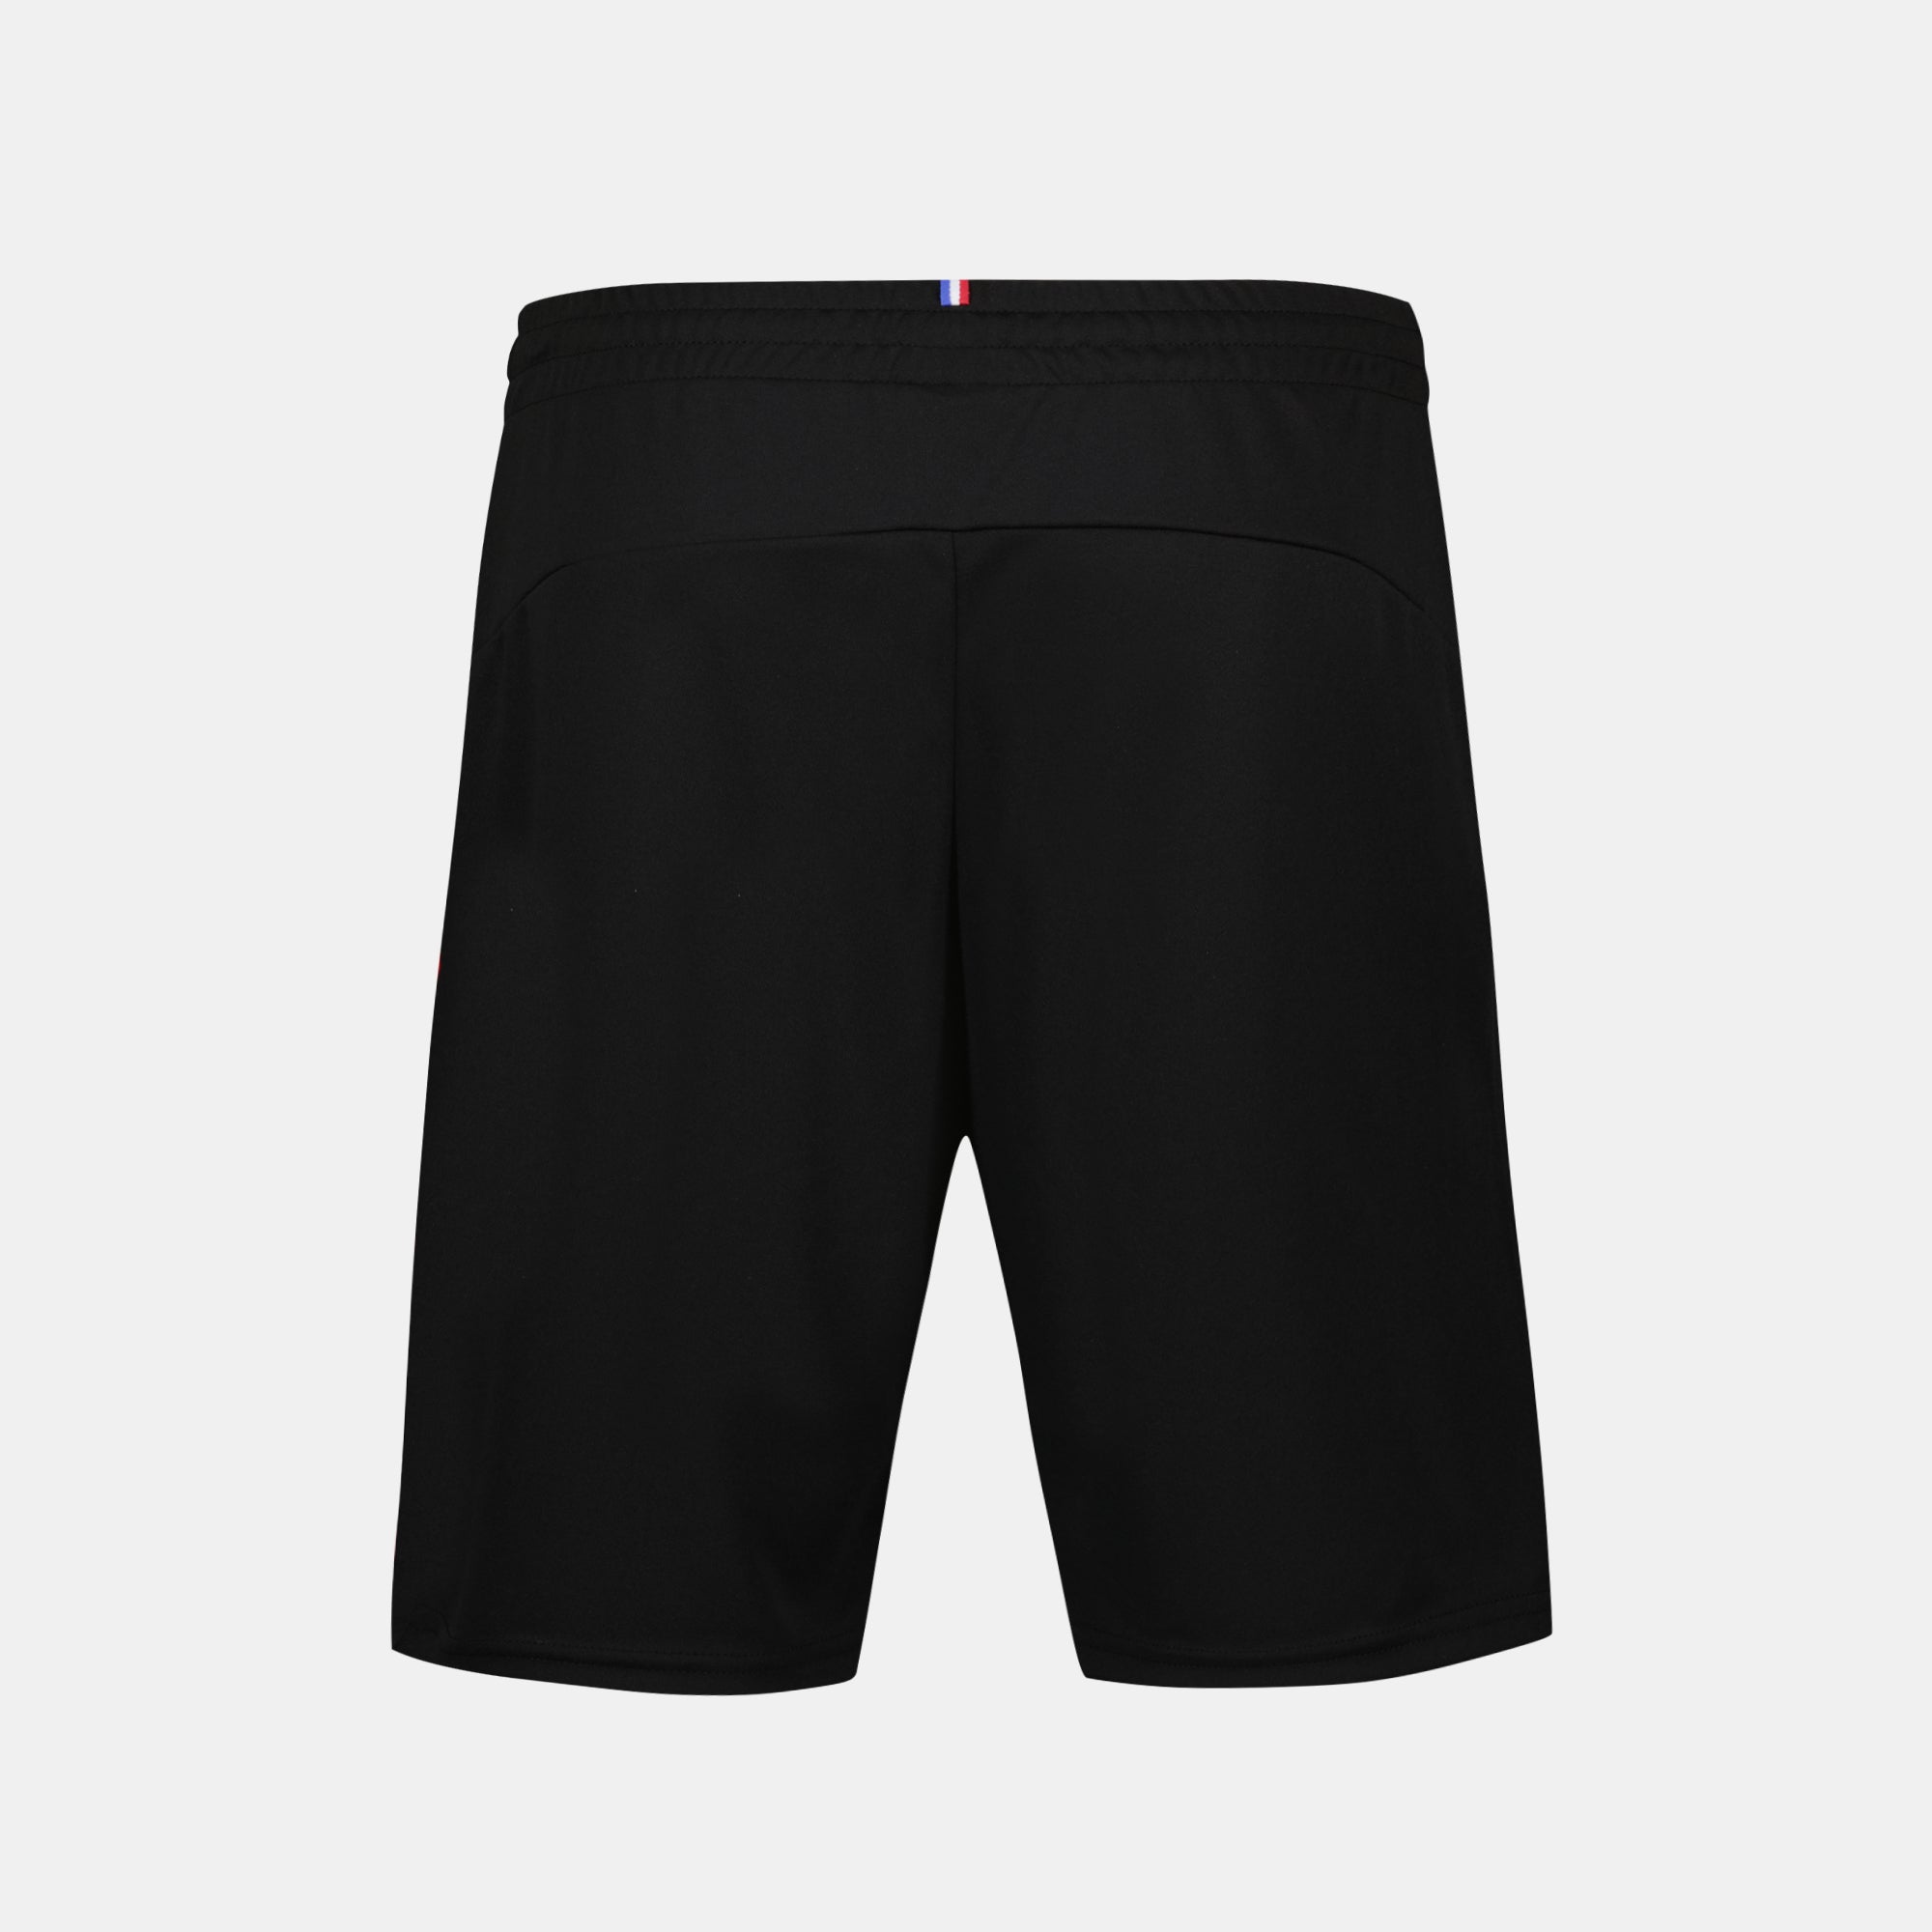 2320913-OGC NICE TRAINING Short M black  | Shorts for men